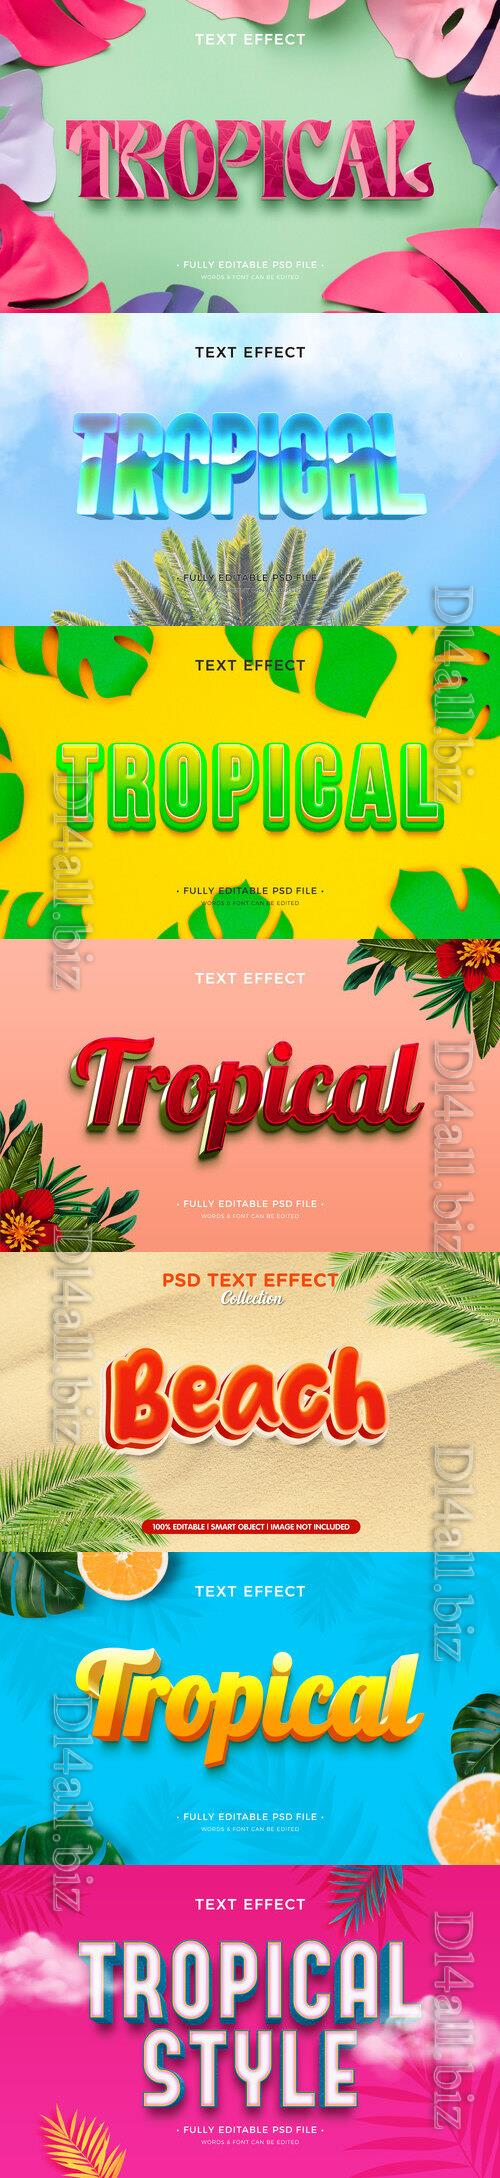 PSD tropical text effect vol 3